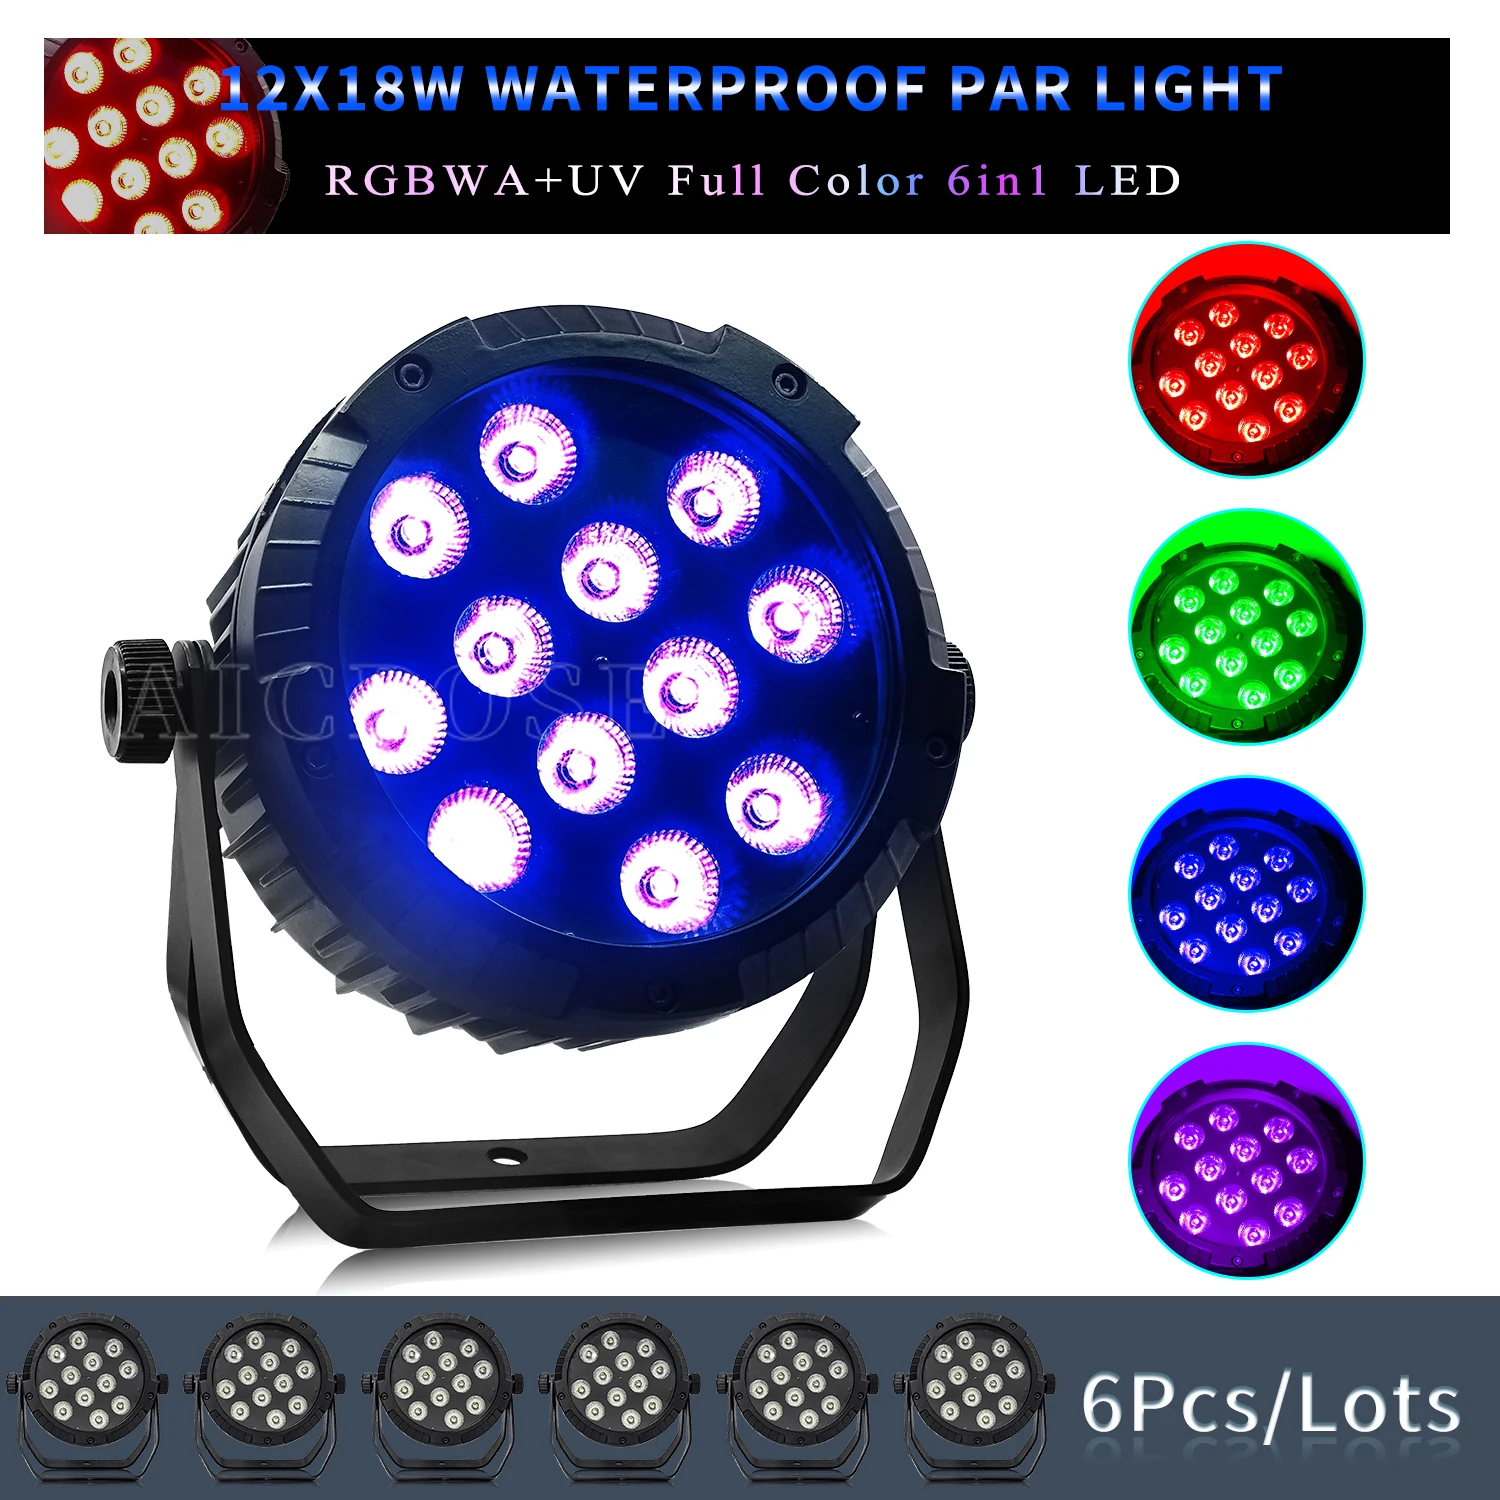 

6Pcs/Lots 12x18W RGBWA UV 6in1 LED Par Light IP65 Waterproof Stage Flat Spotlight For Party Wedding DJ Disco Stage Lighting